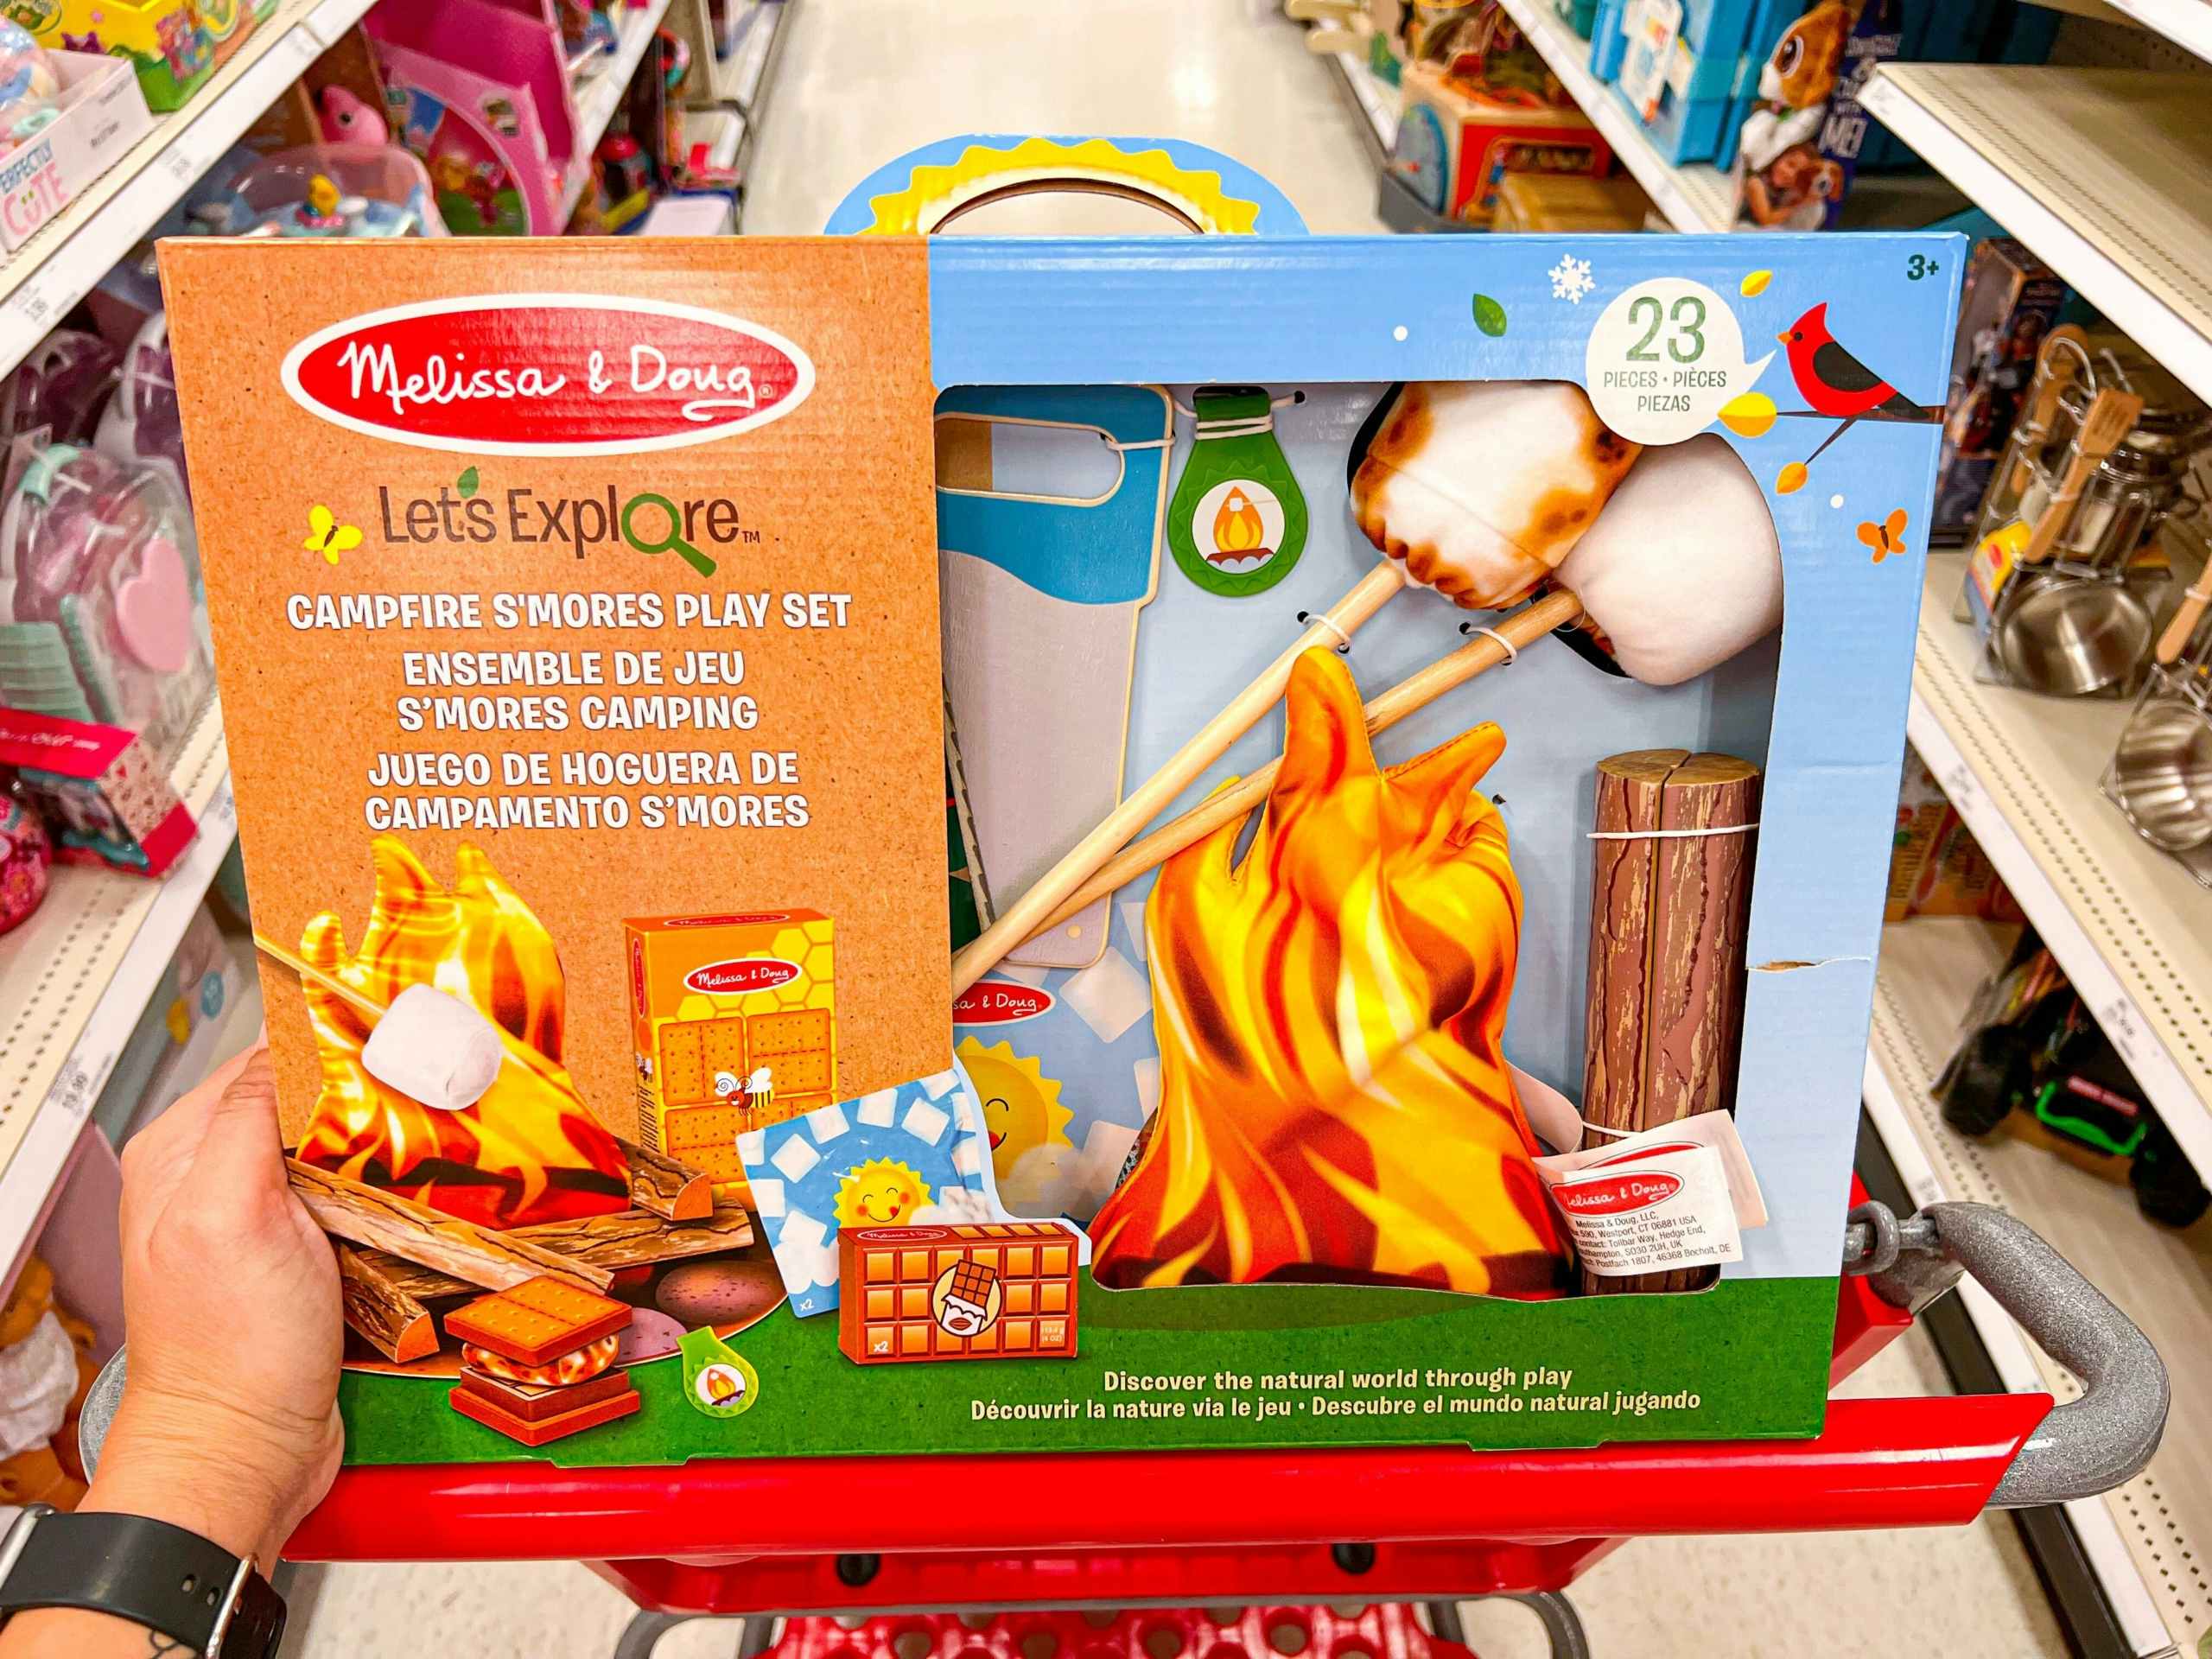 A Melissa & Doug Let's Explore Campfire Smores Play Set in a Target shopping cart